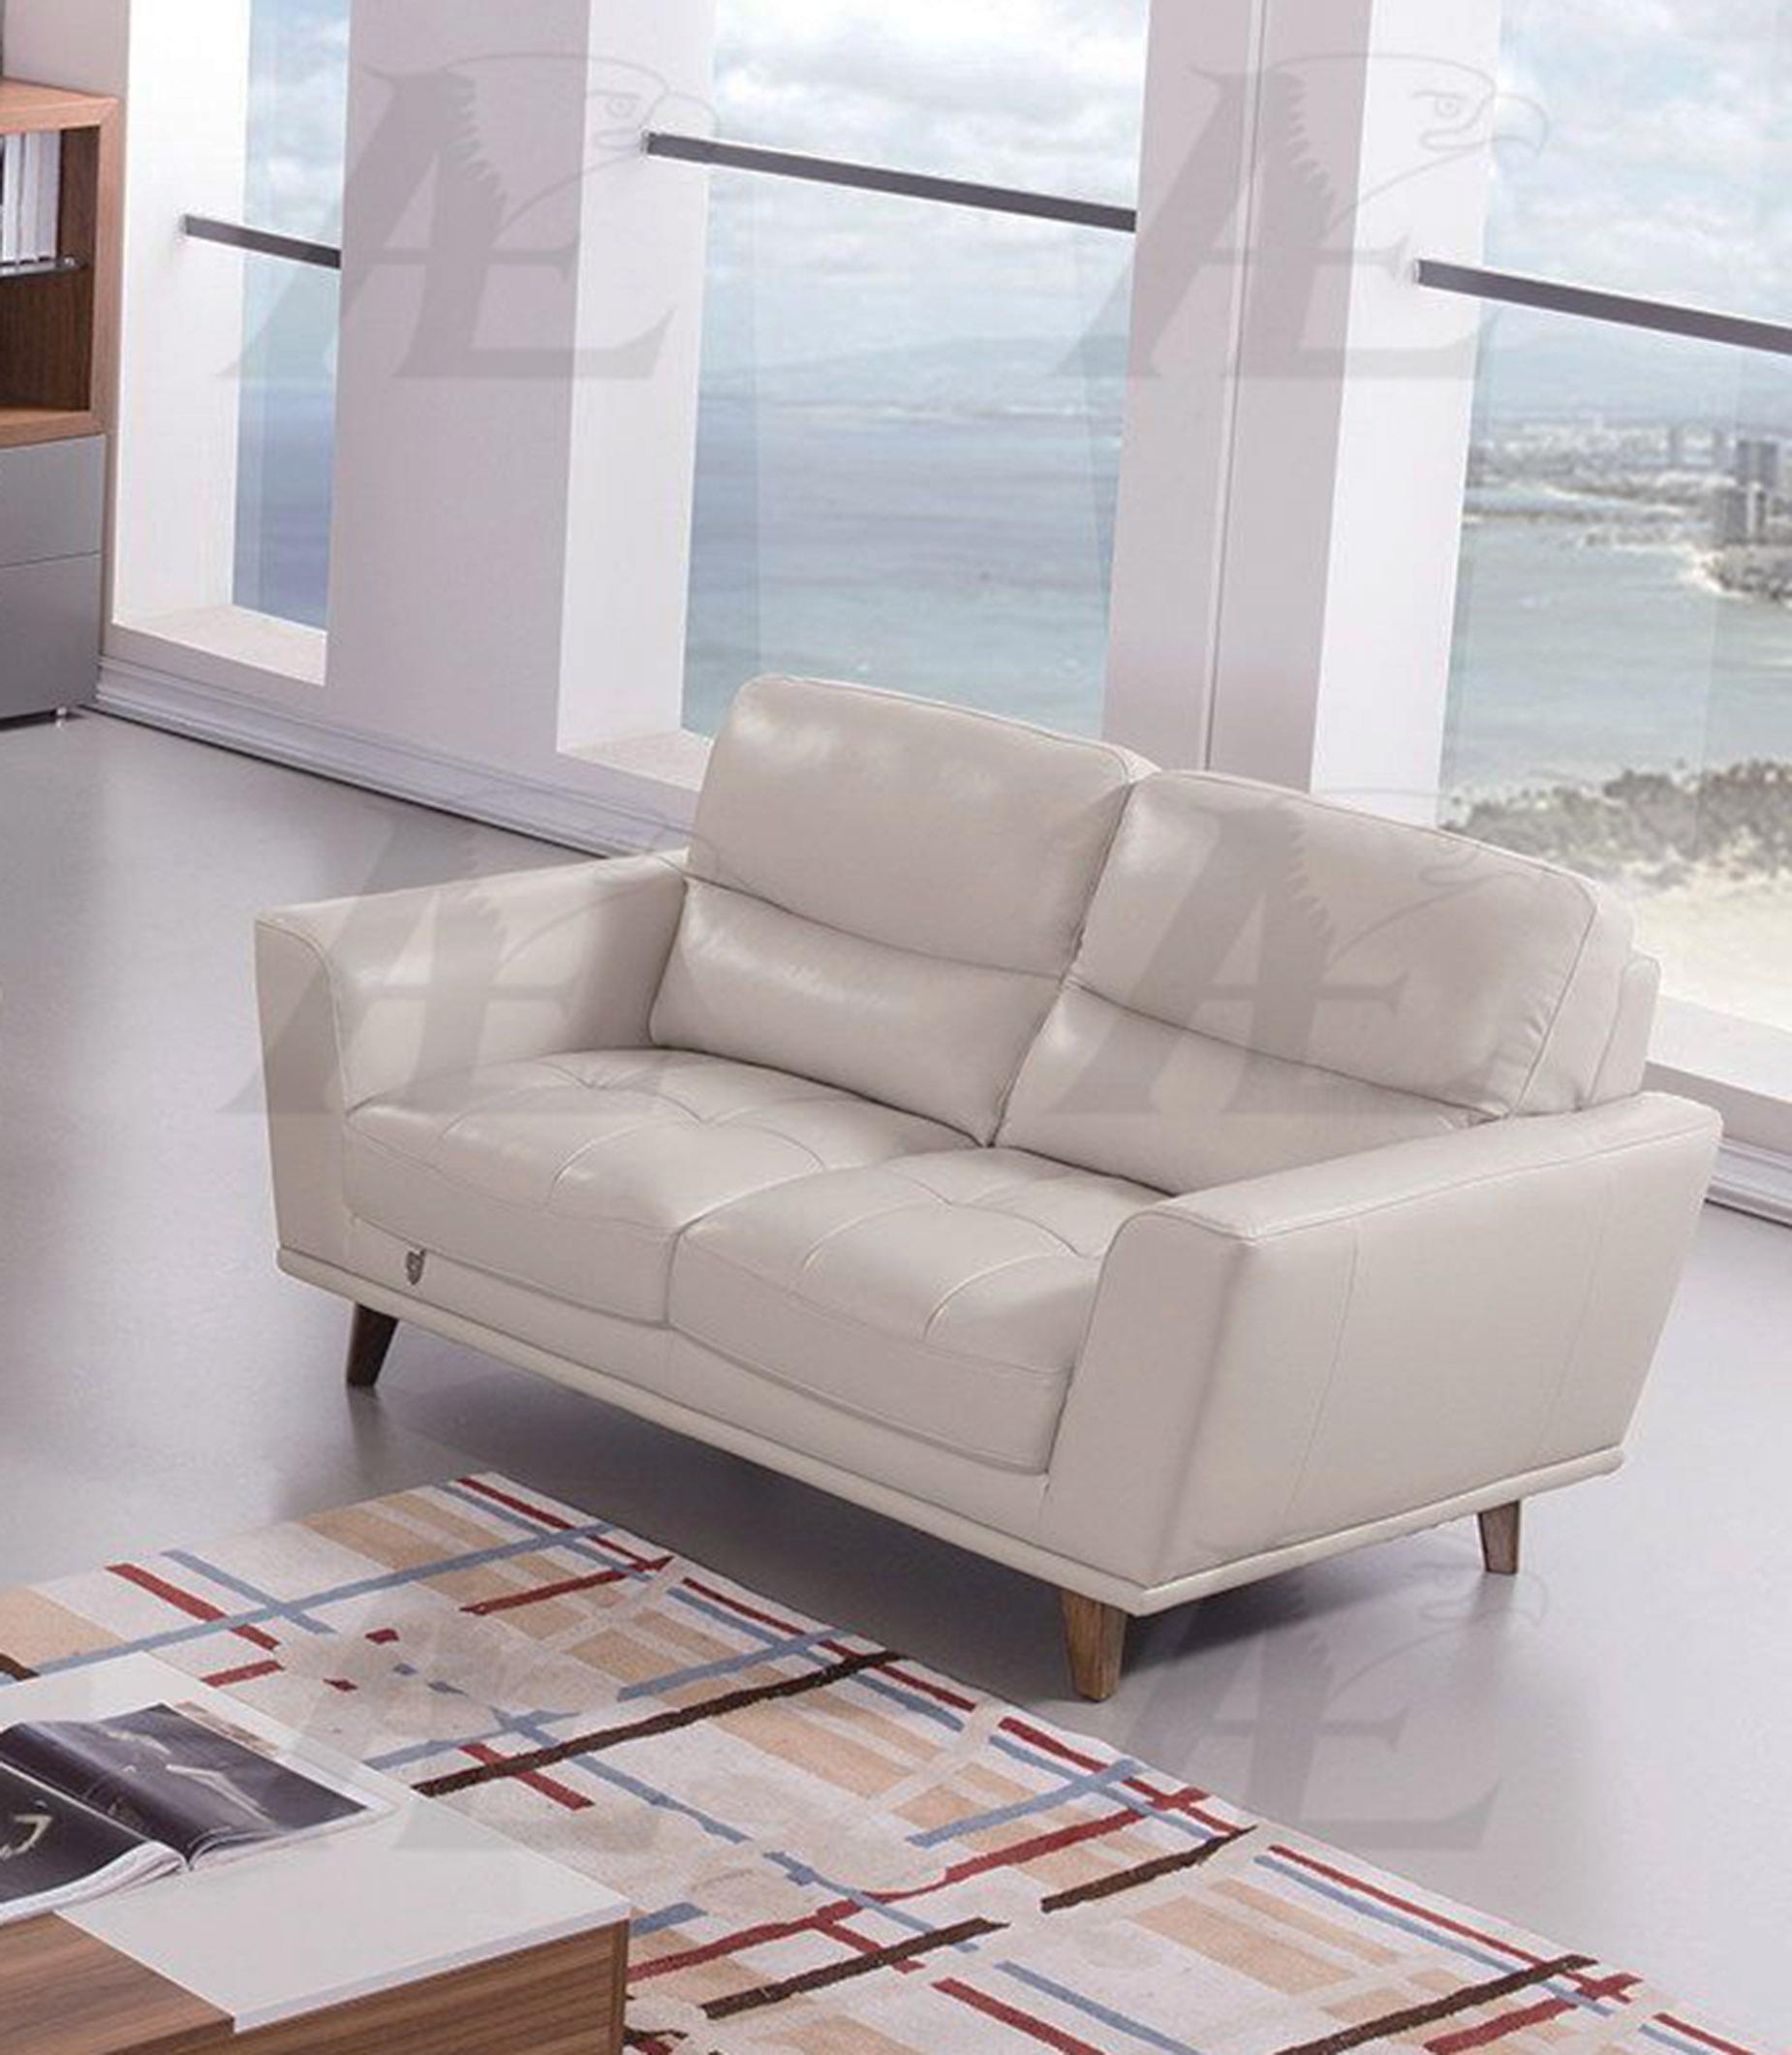 

    
American Eagle Furniture EK082-LG Sofa Loveseat and Chair Set Light Gray EK082-LG Set-3
